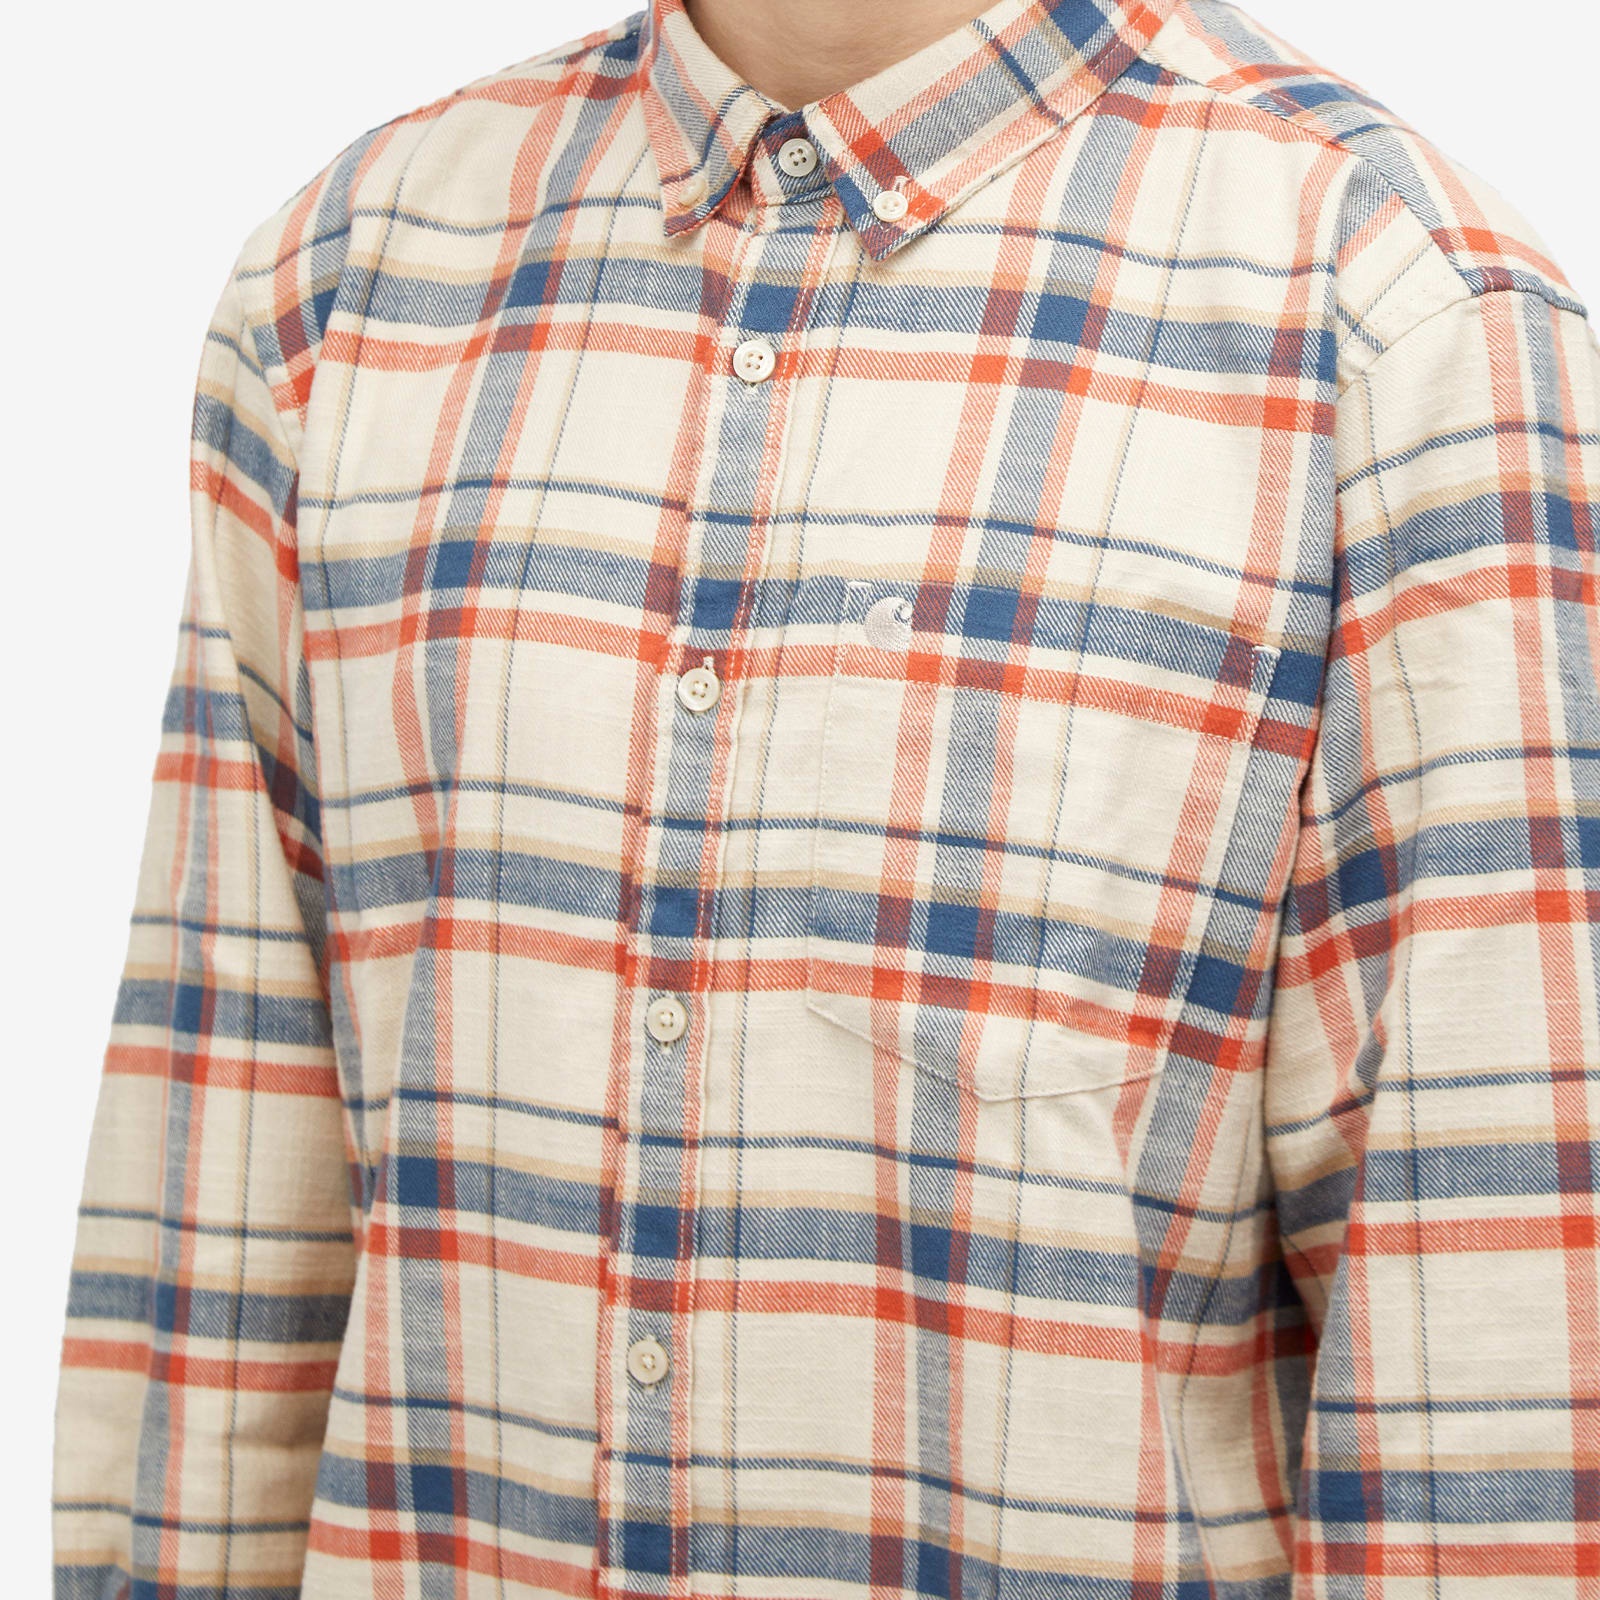 Carhartt WIP Swenson Check Shirt - 5